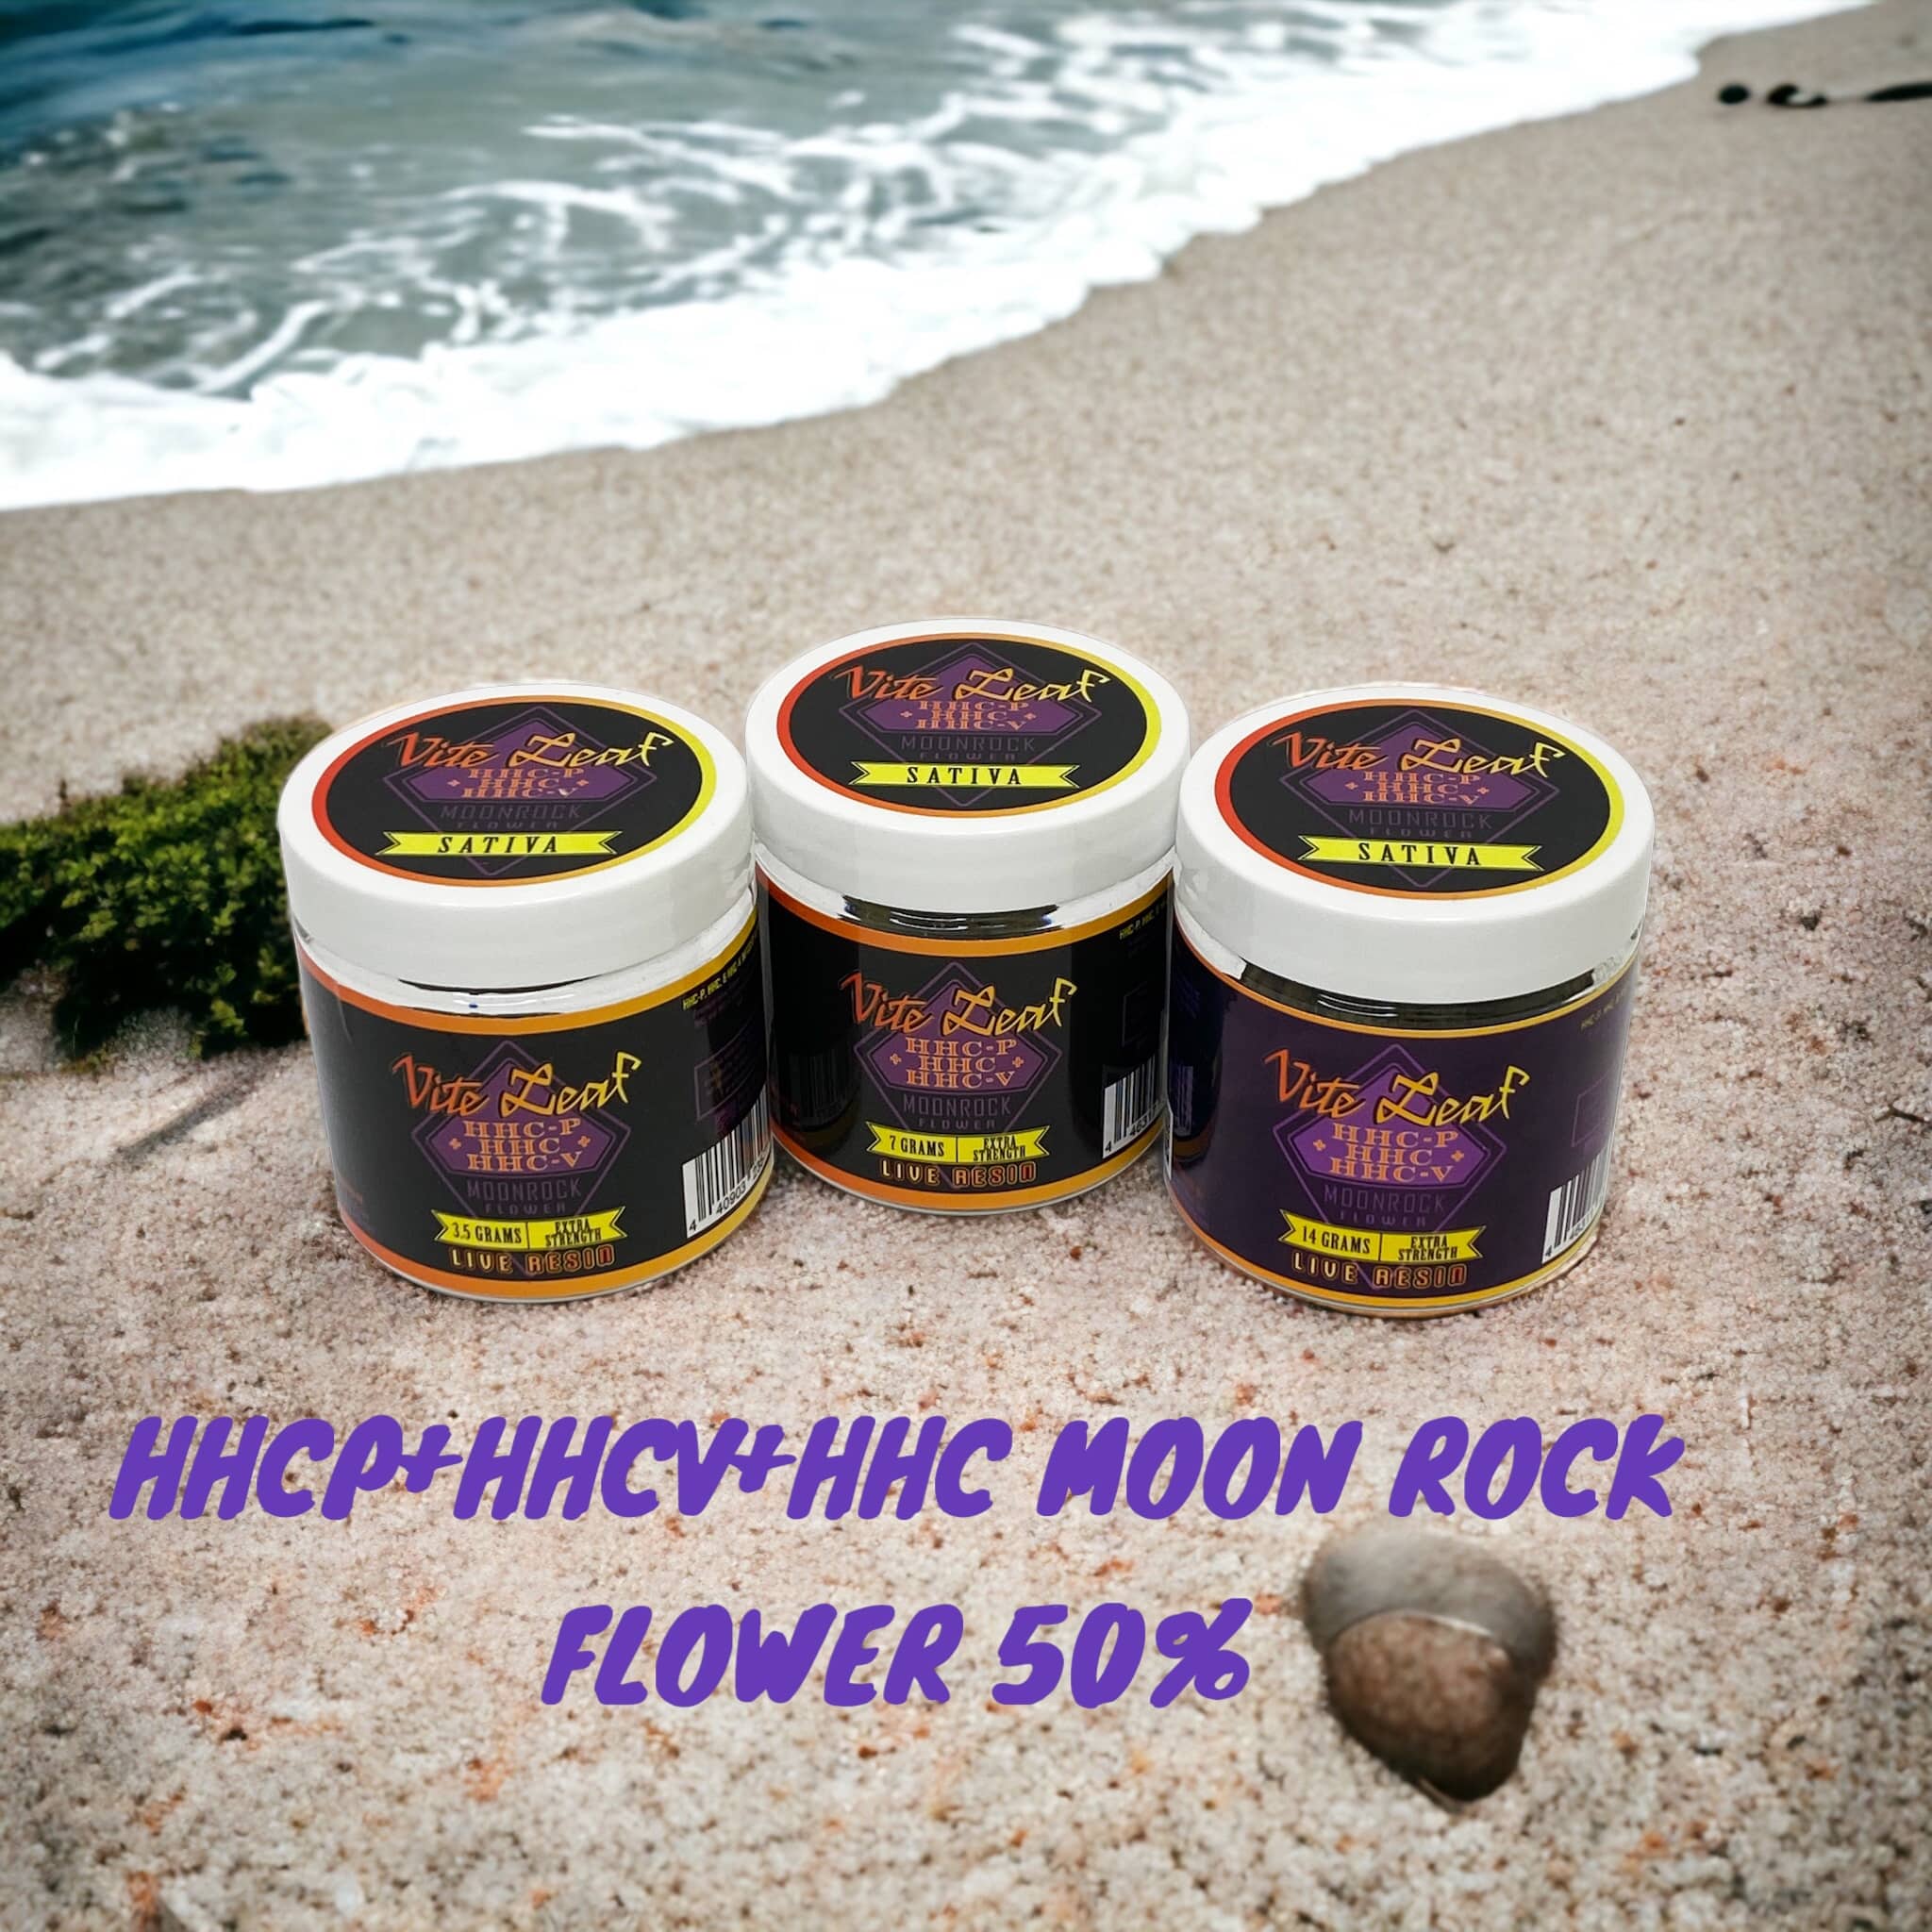 Hhcp flower moon rock